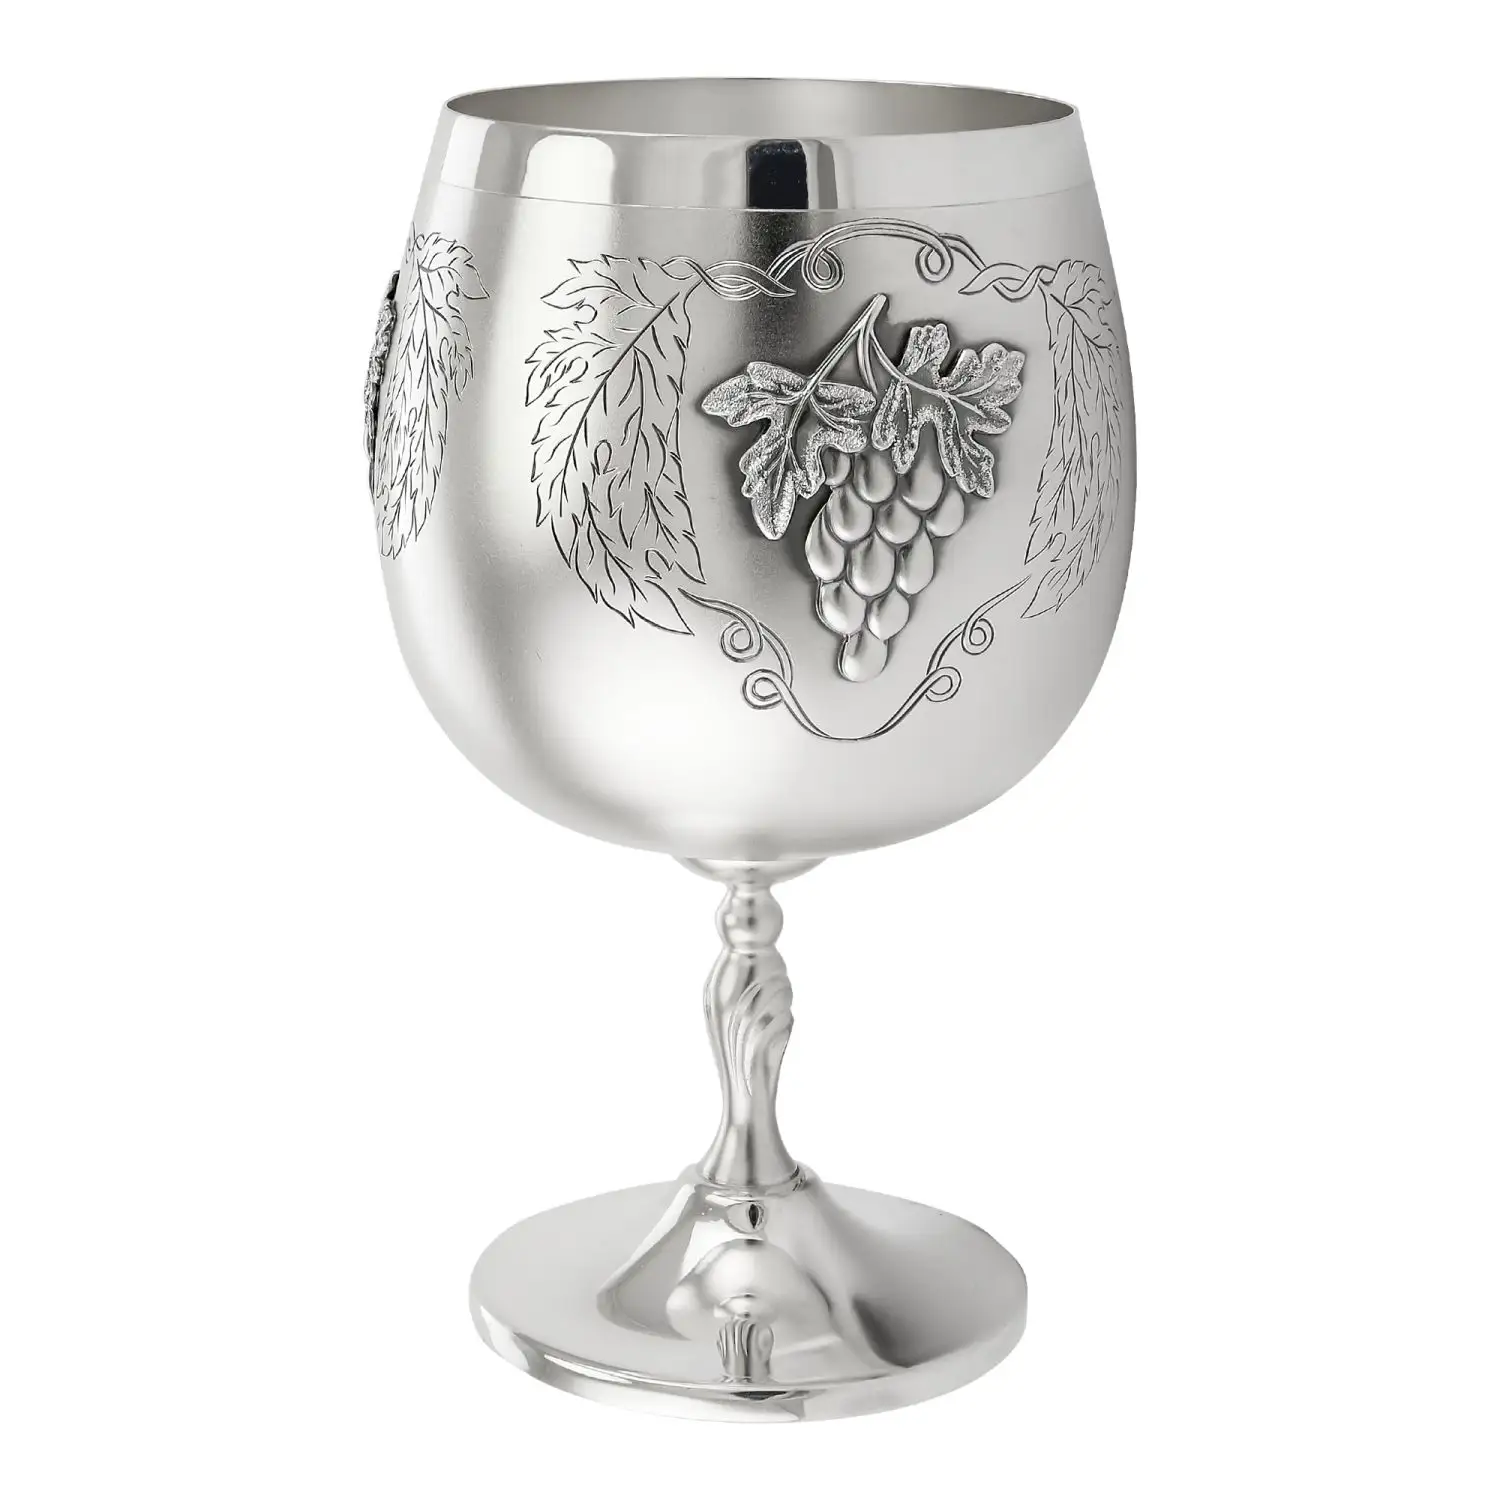 Бокал для коньяка Виноградная лоза (Серебро 925) бокал для коньяка новогодний